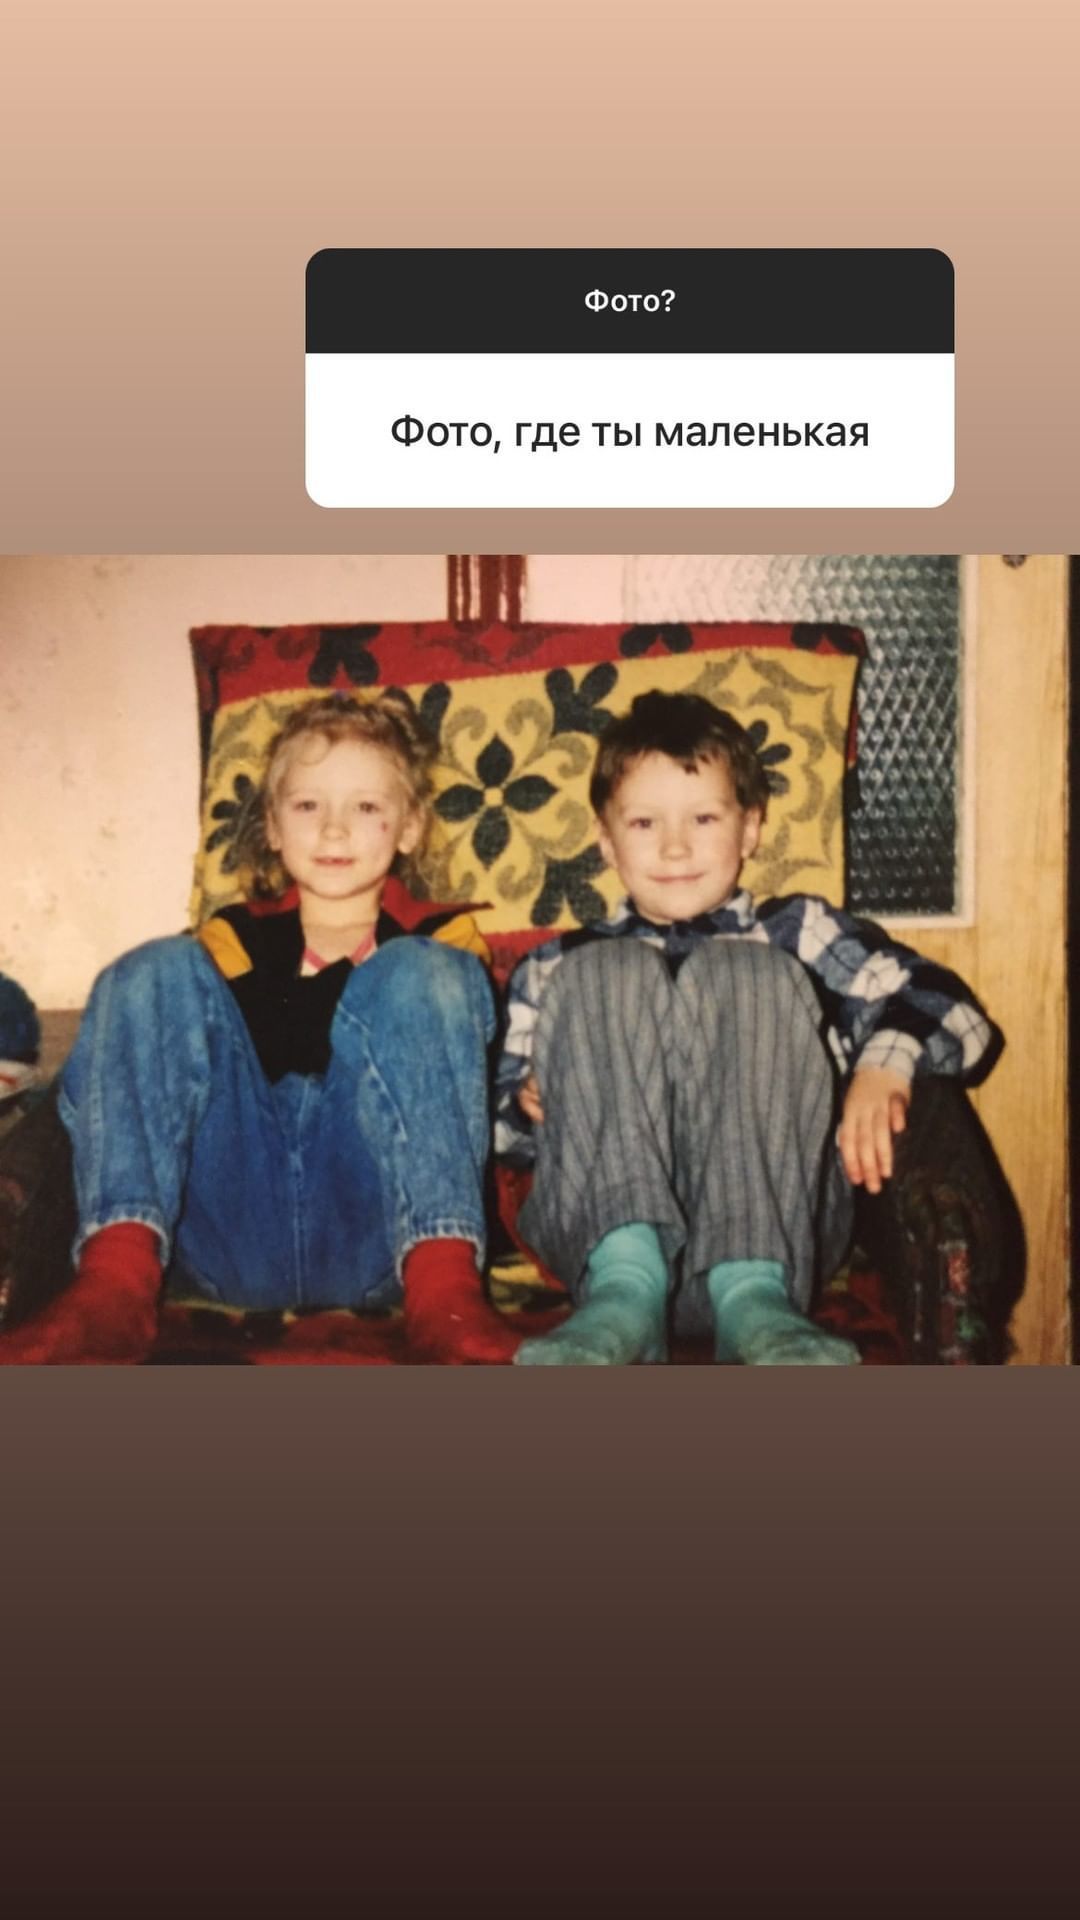 Показала Анна й себе у дитинстві / © instagram.com/smorkovkina